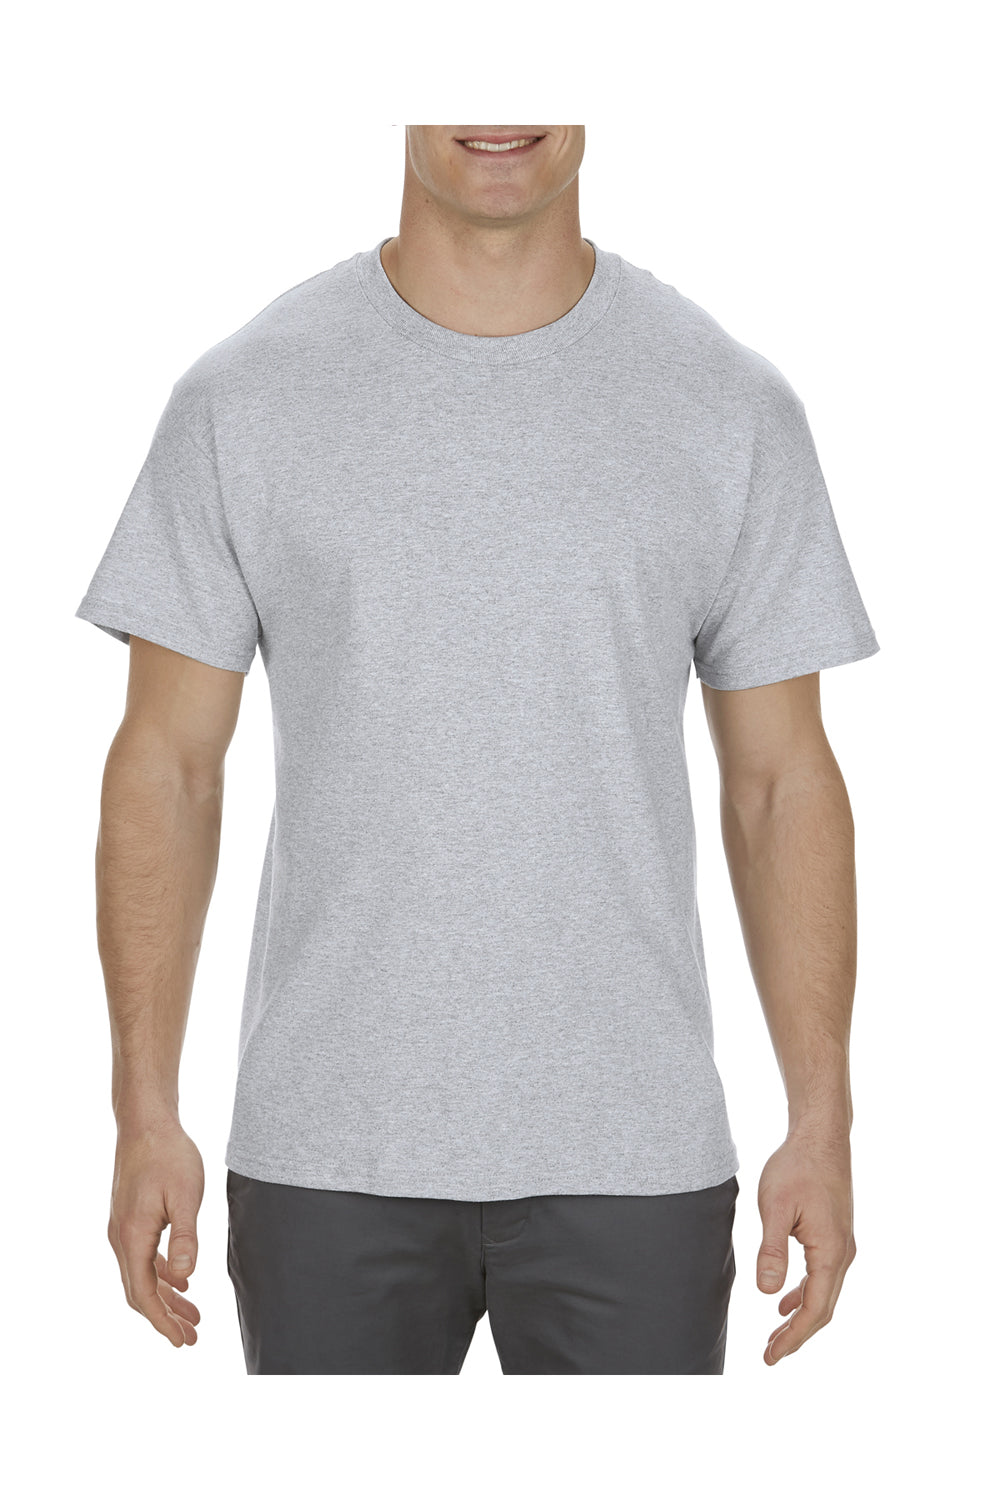 Alstyle AL1901 Mens Short Sleeve Crewneck T-Shirt Heather Grey Front